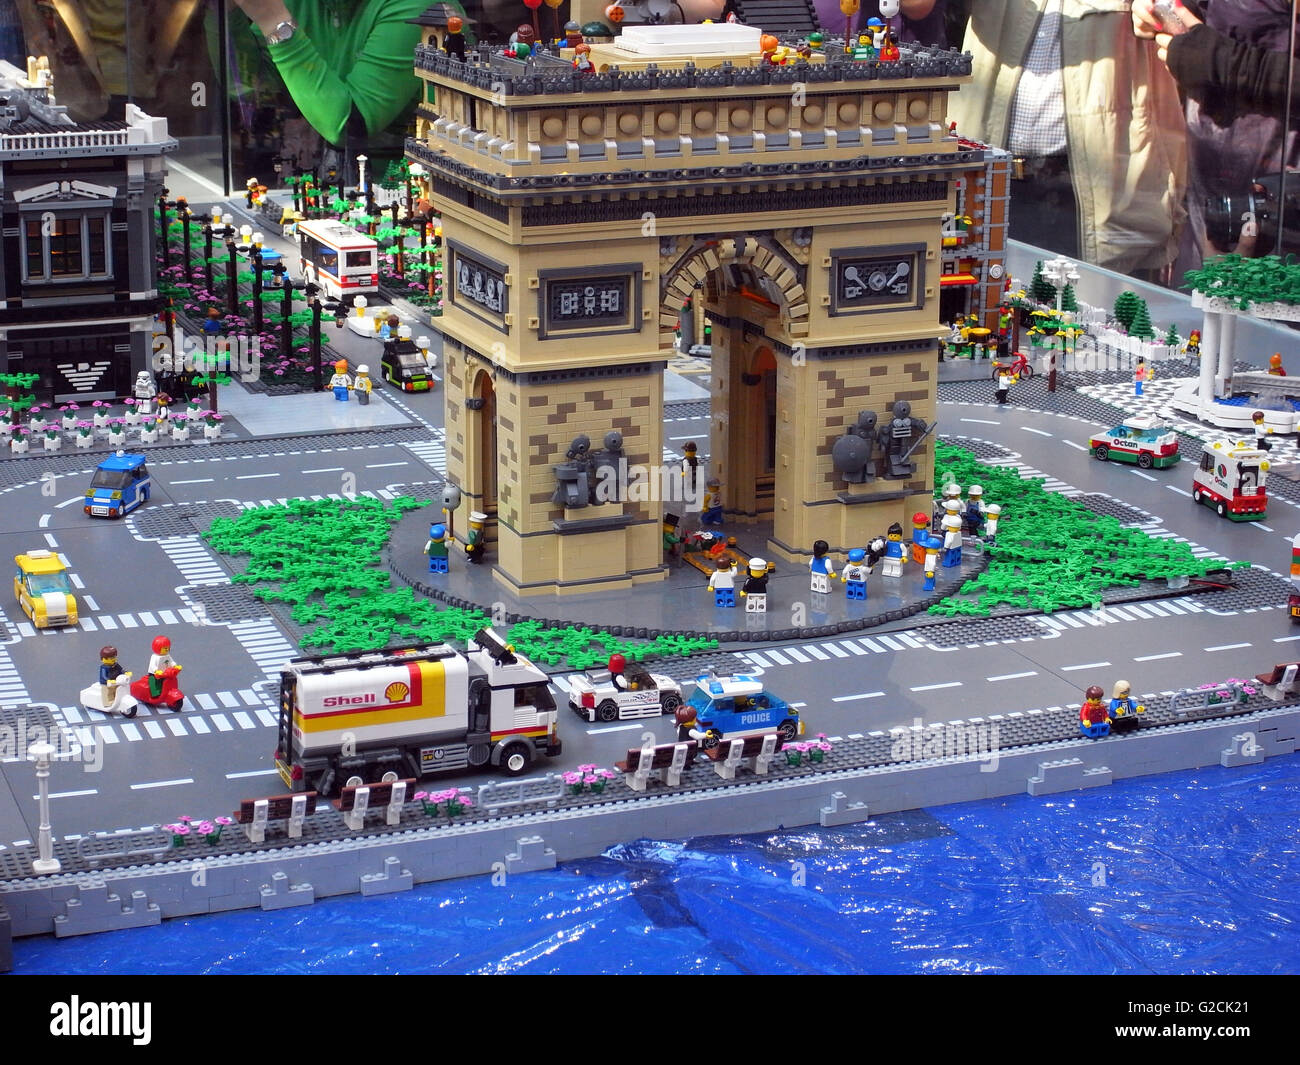 LEGO Modell Paris Triumphbogen  Champs-Elysées-Stadt-Auto-Menschen-Landschaft-Spielzeug Spaß tagsüber  Stockfotografie - Alamy